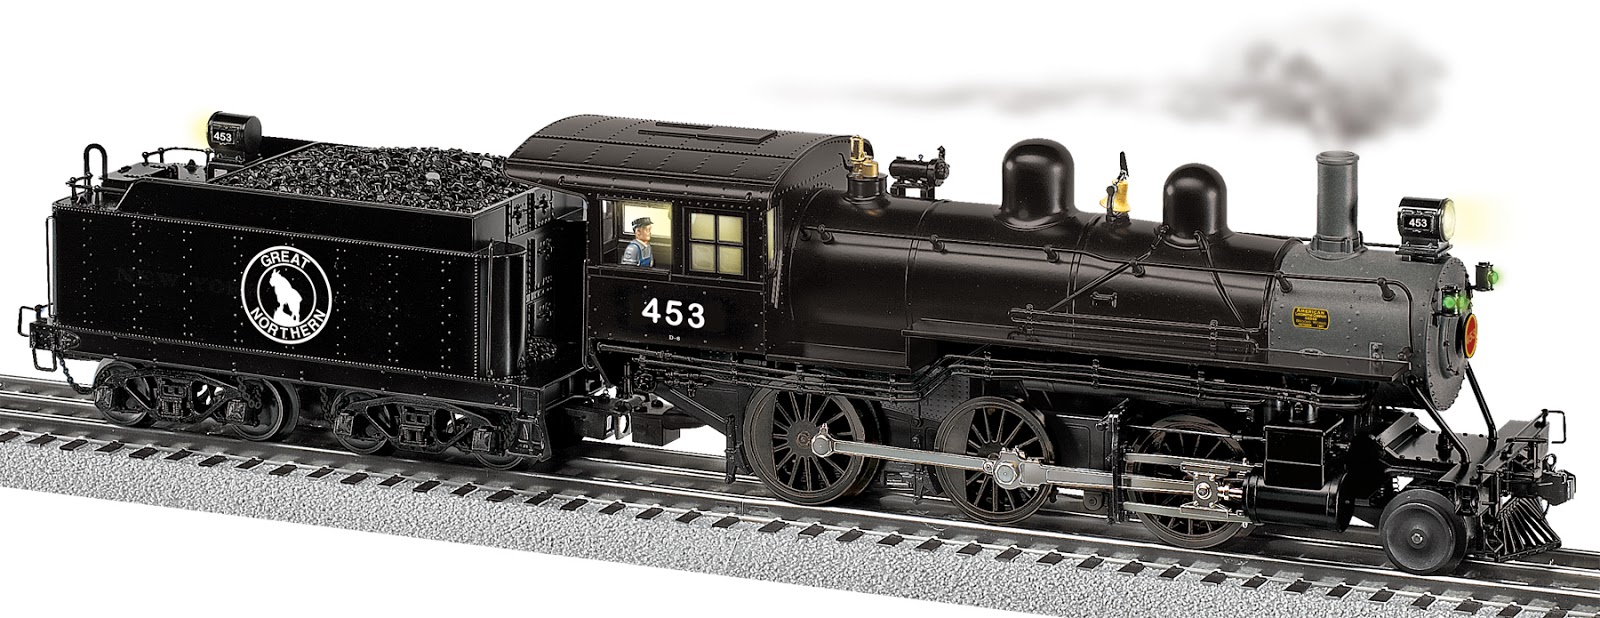 Model Trains For Beginners: Lionel Model Trains